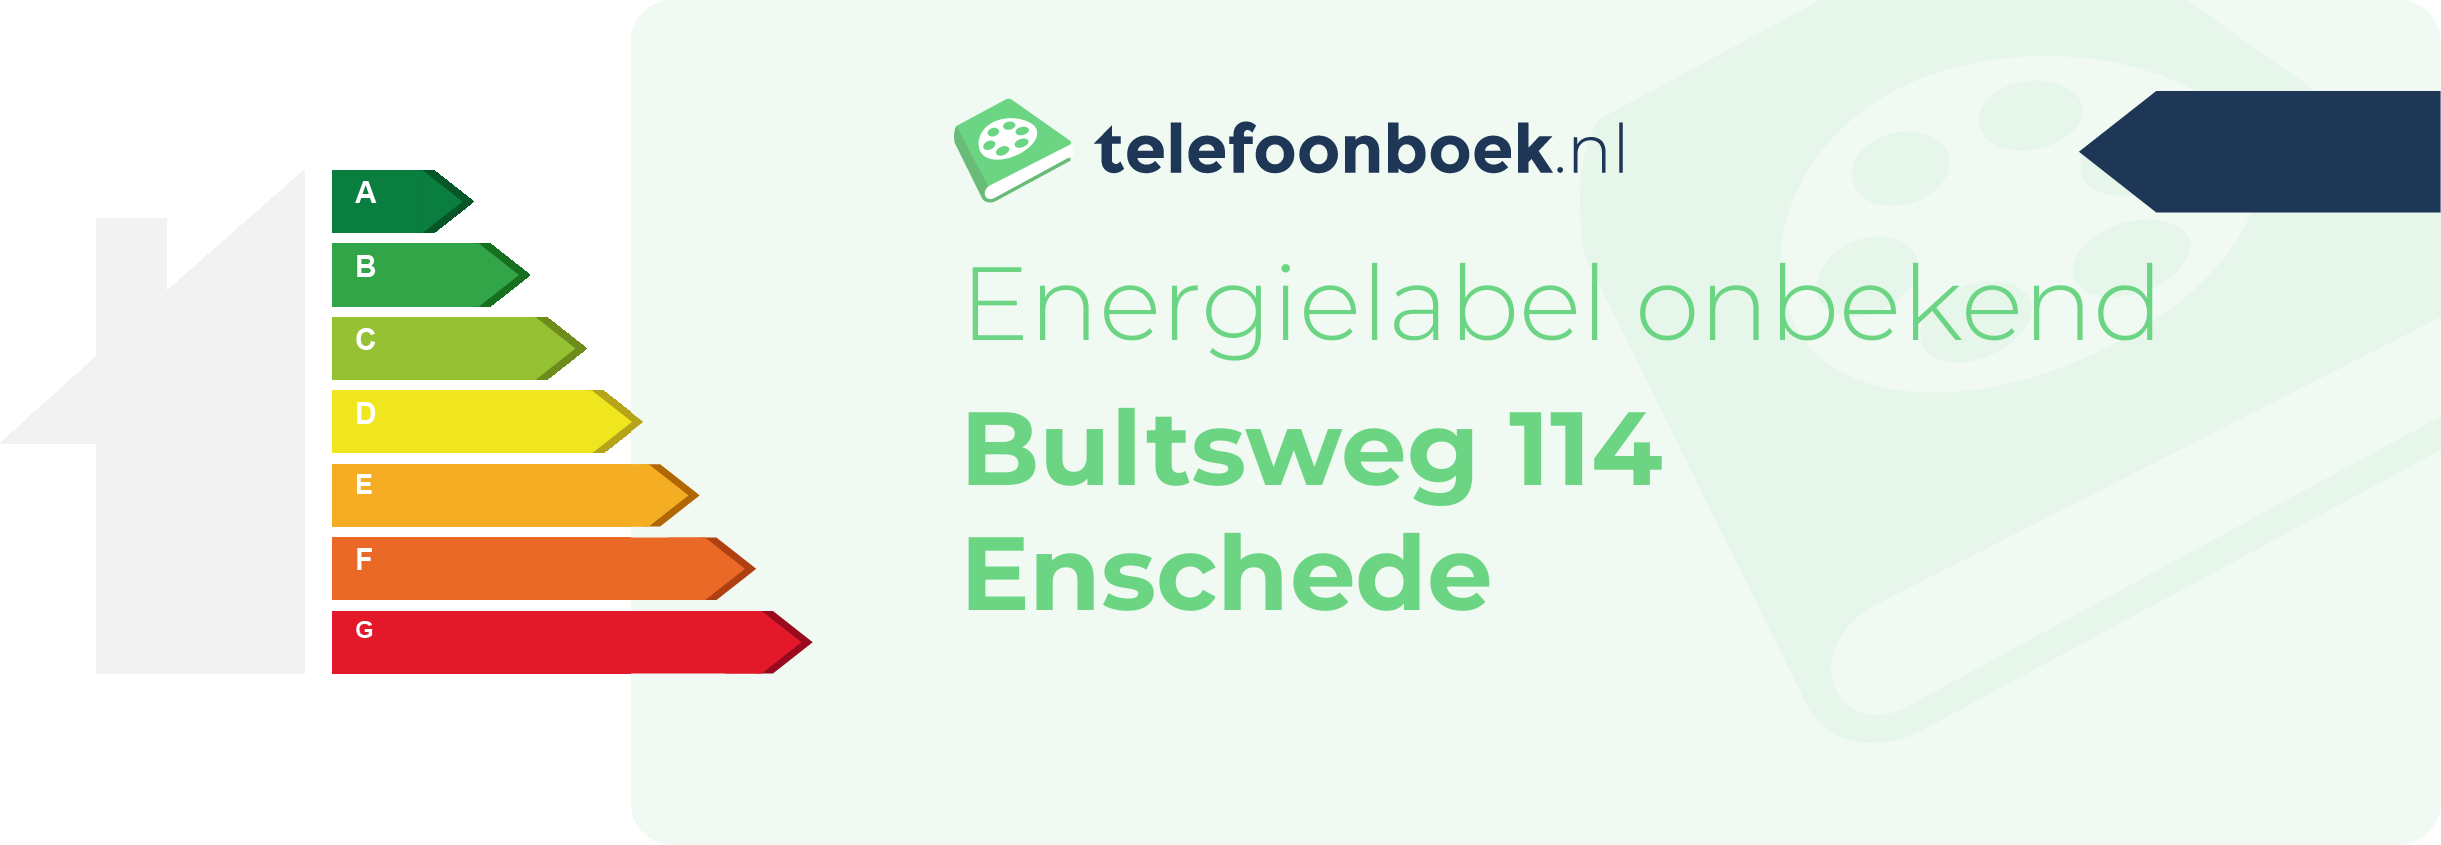 Energielabel Bultsweg 114 Enschede